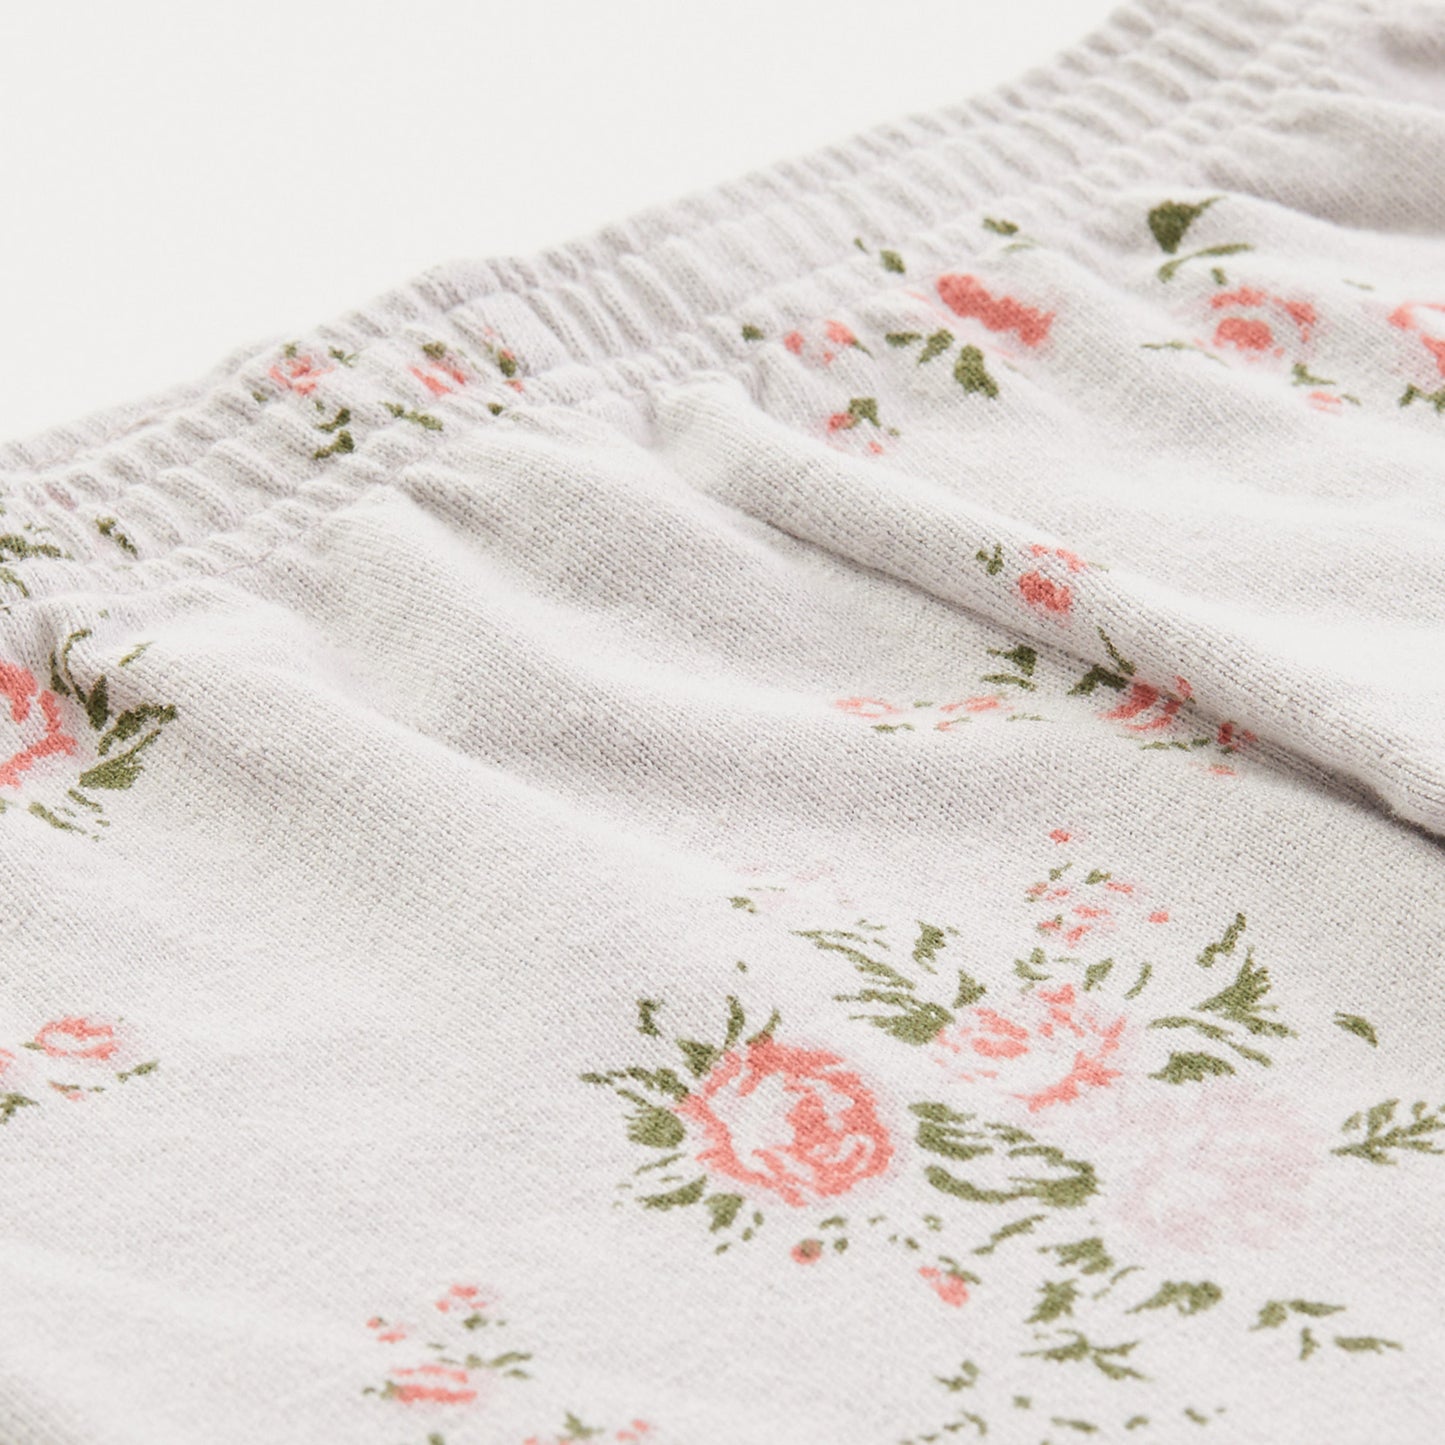 Kids Elastic Waist Sweats With Floral Print (1692656140390)